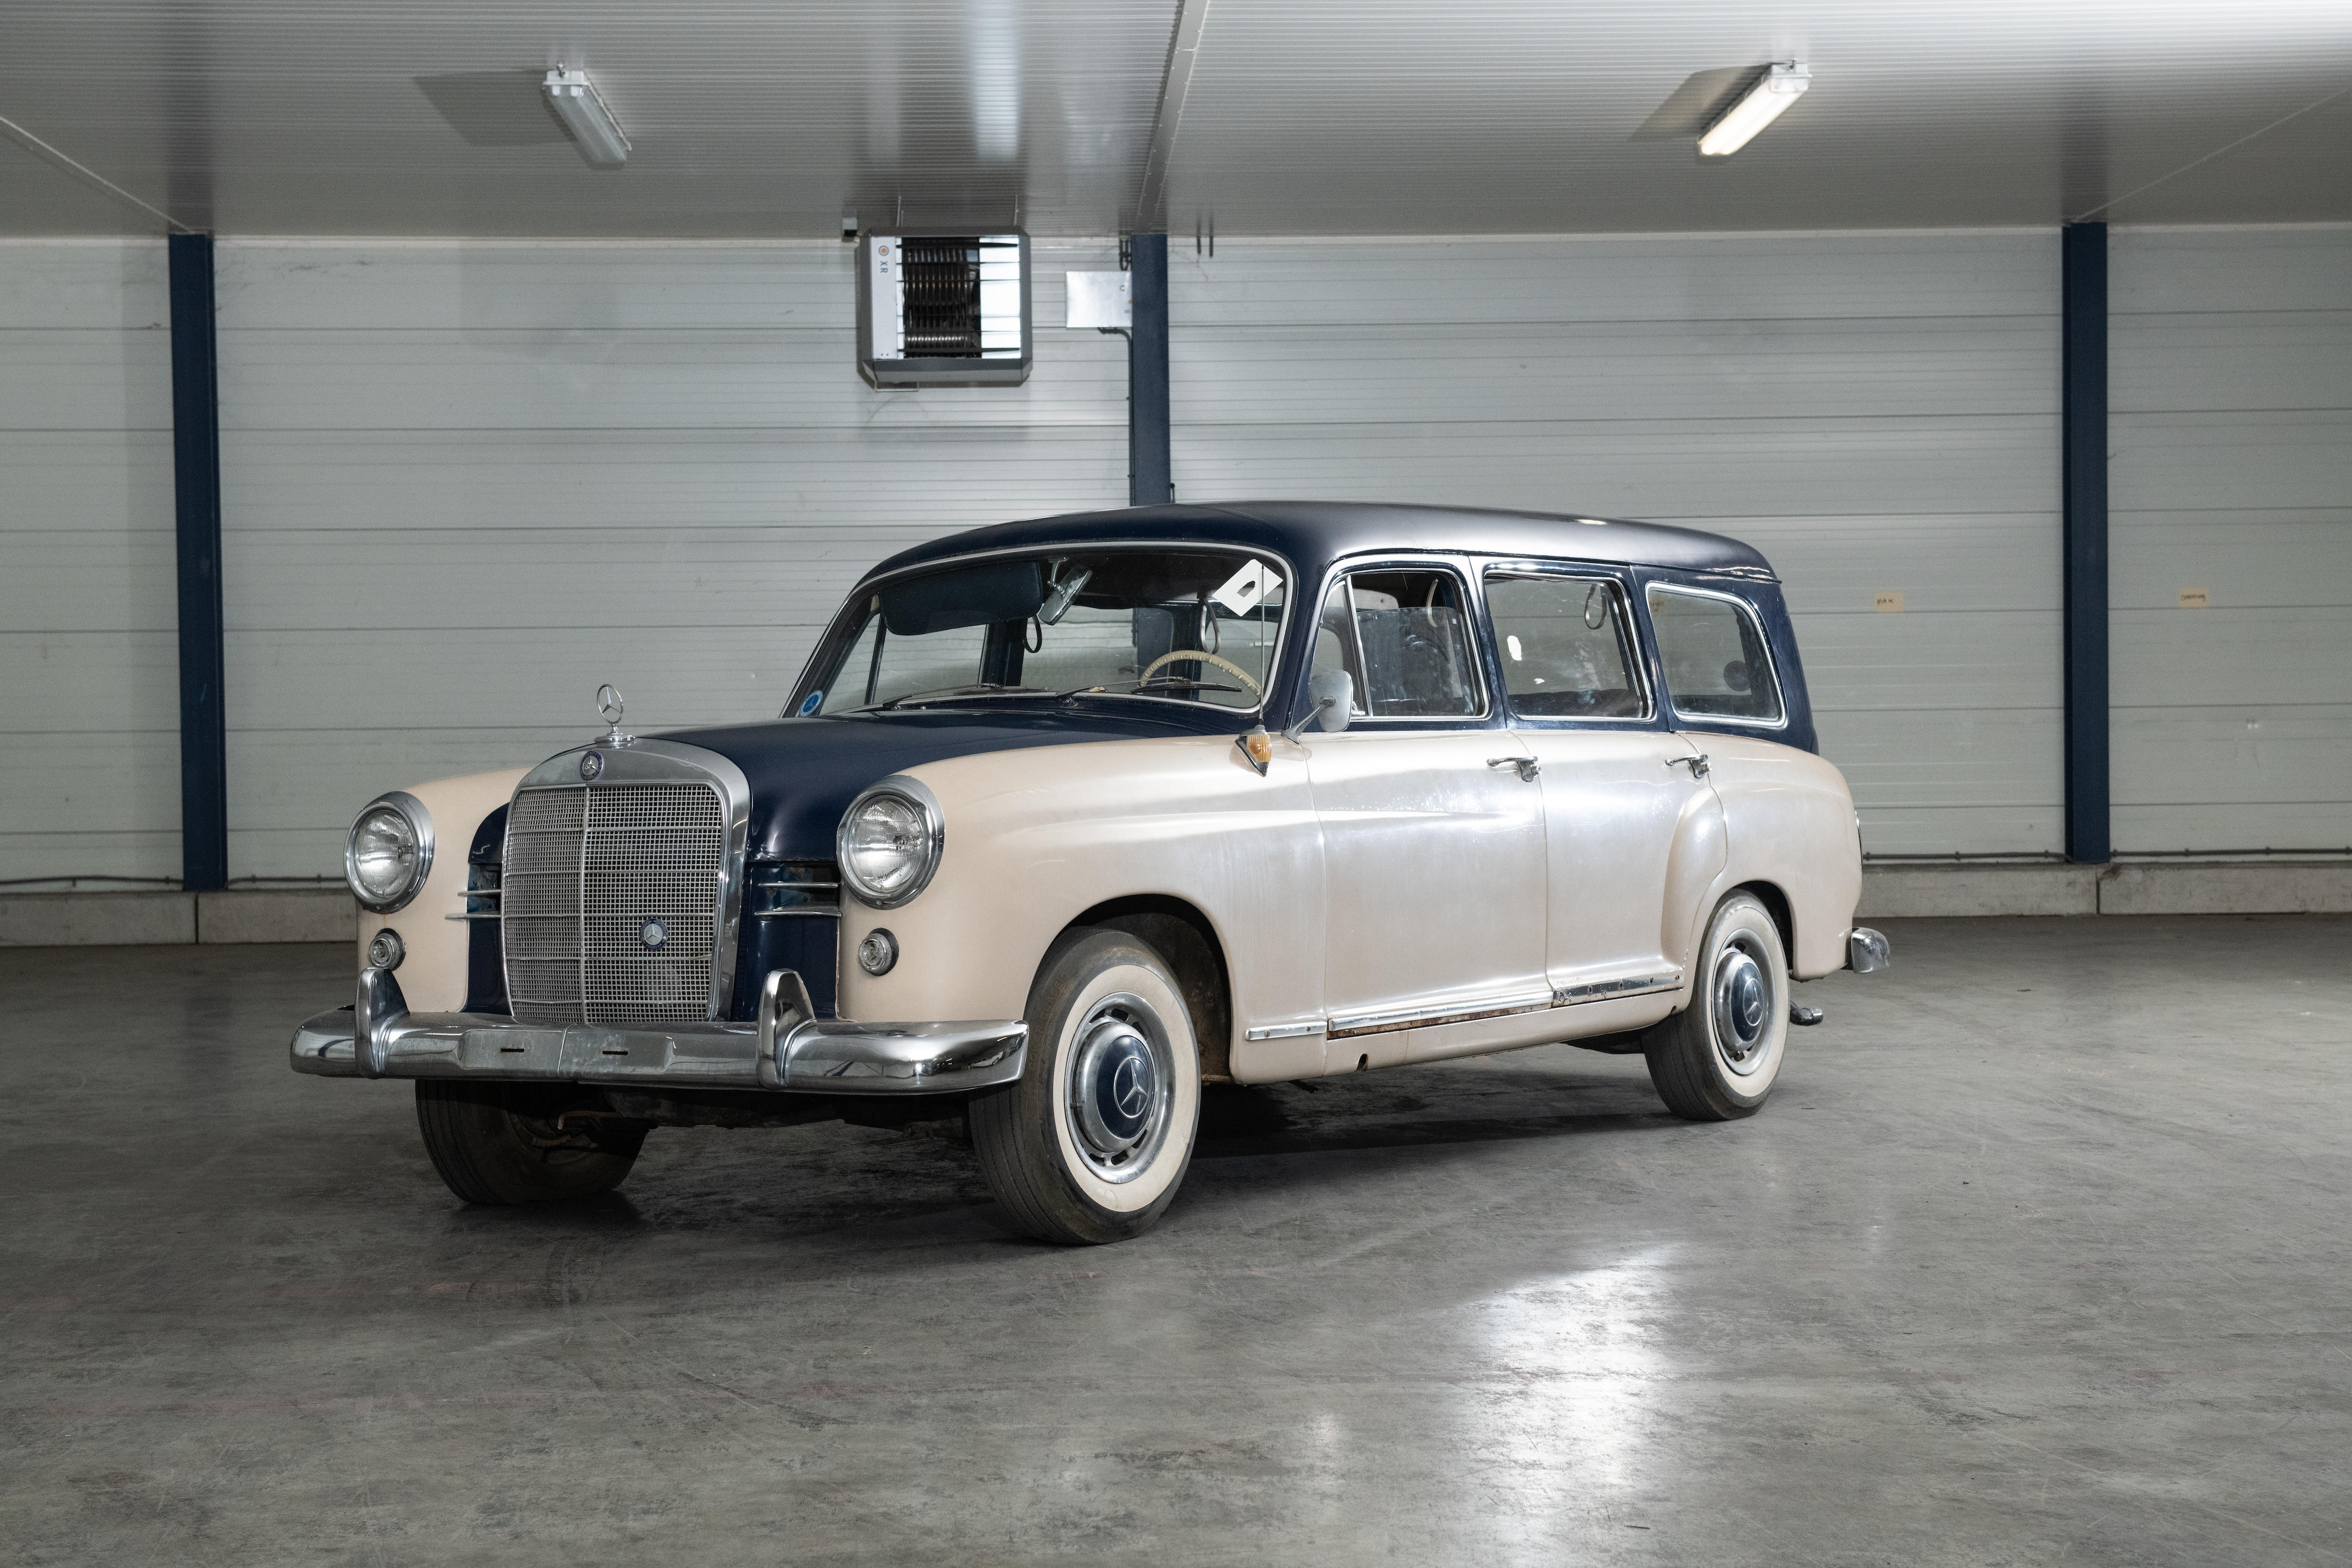 Bonhams : 1961 Mercedes-Benz 190b Kombi Coachwork by Binz Body no. A  121002-10-000005 Chassis no. A1210021000005 Engine no. 121970-10-001665